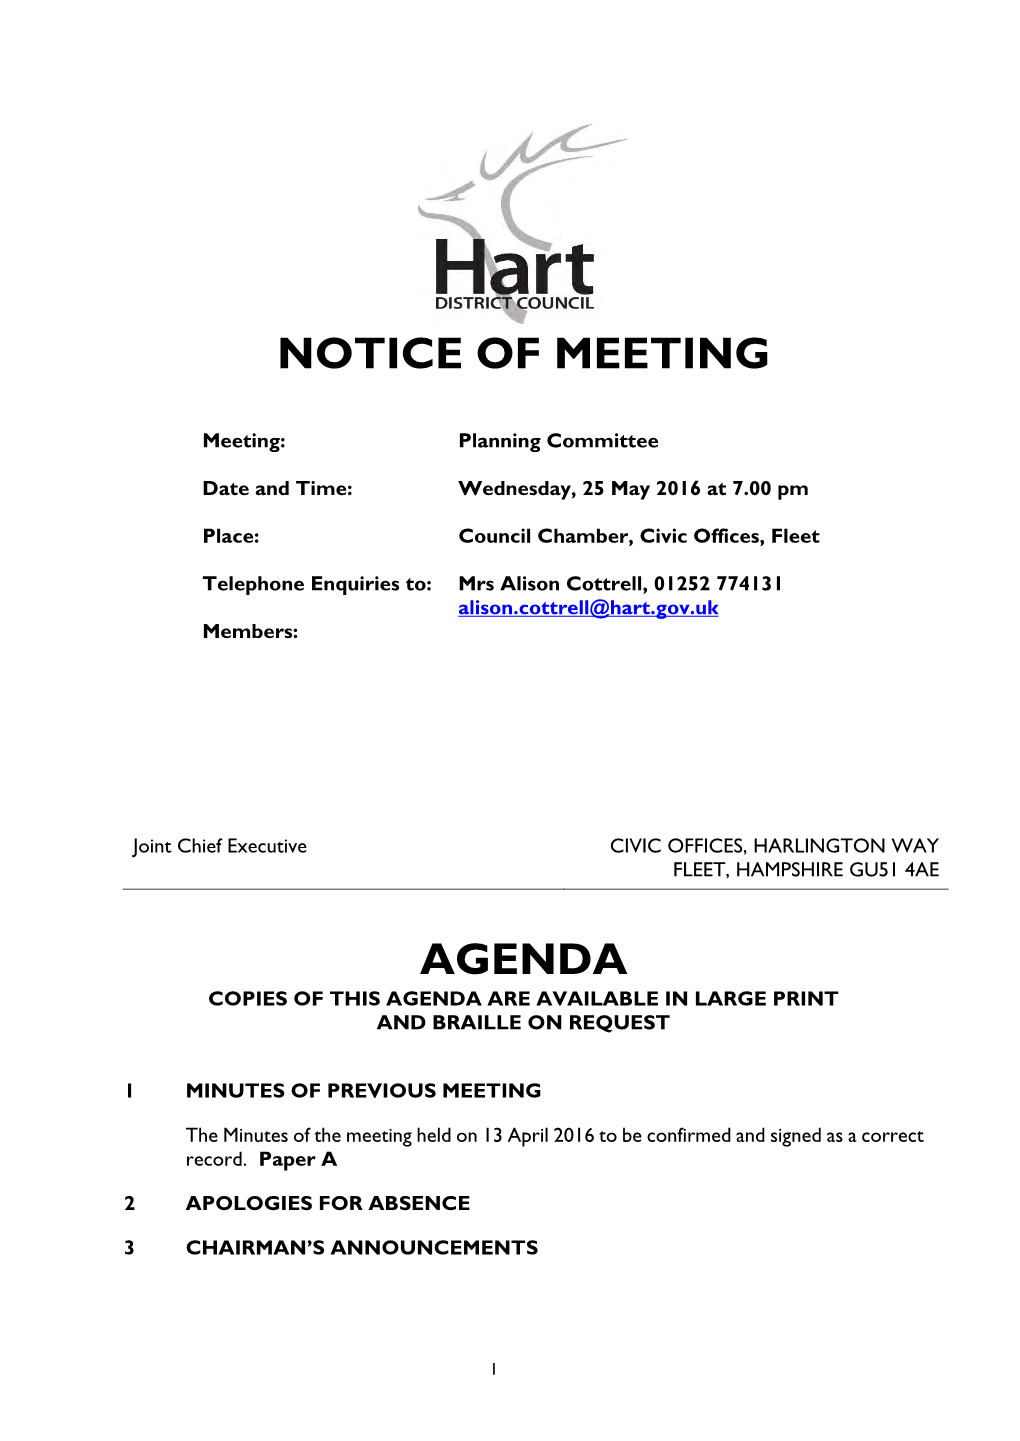 Notice of Meeting Agenda